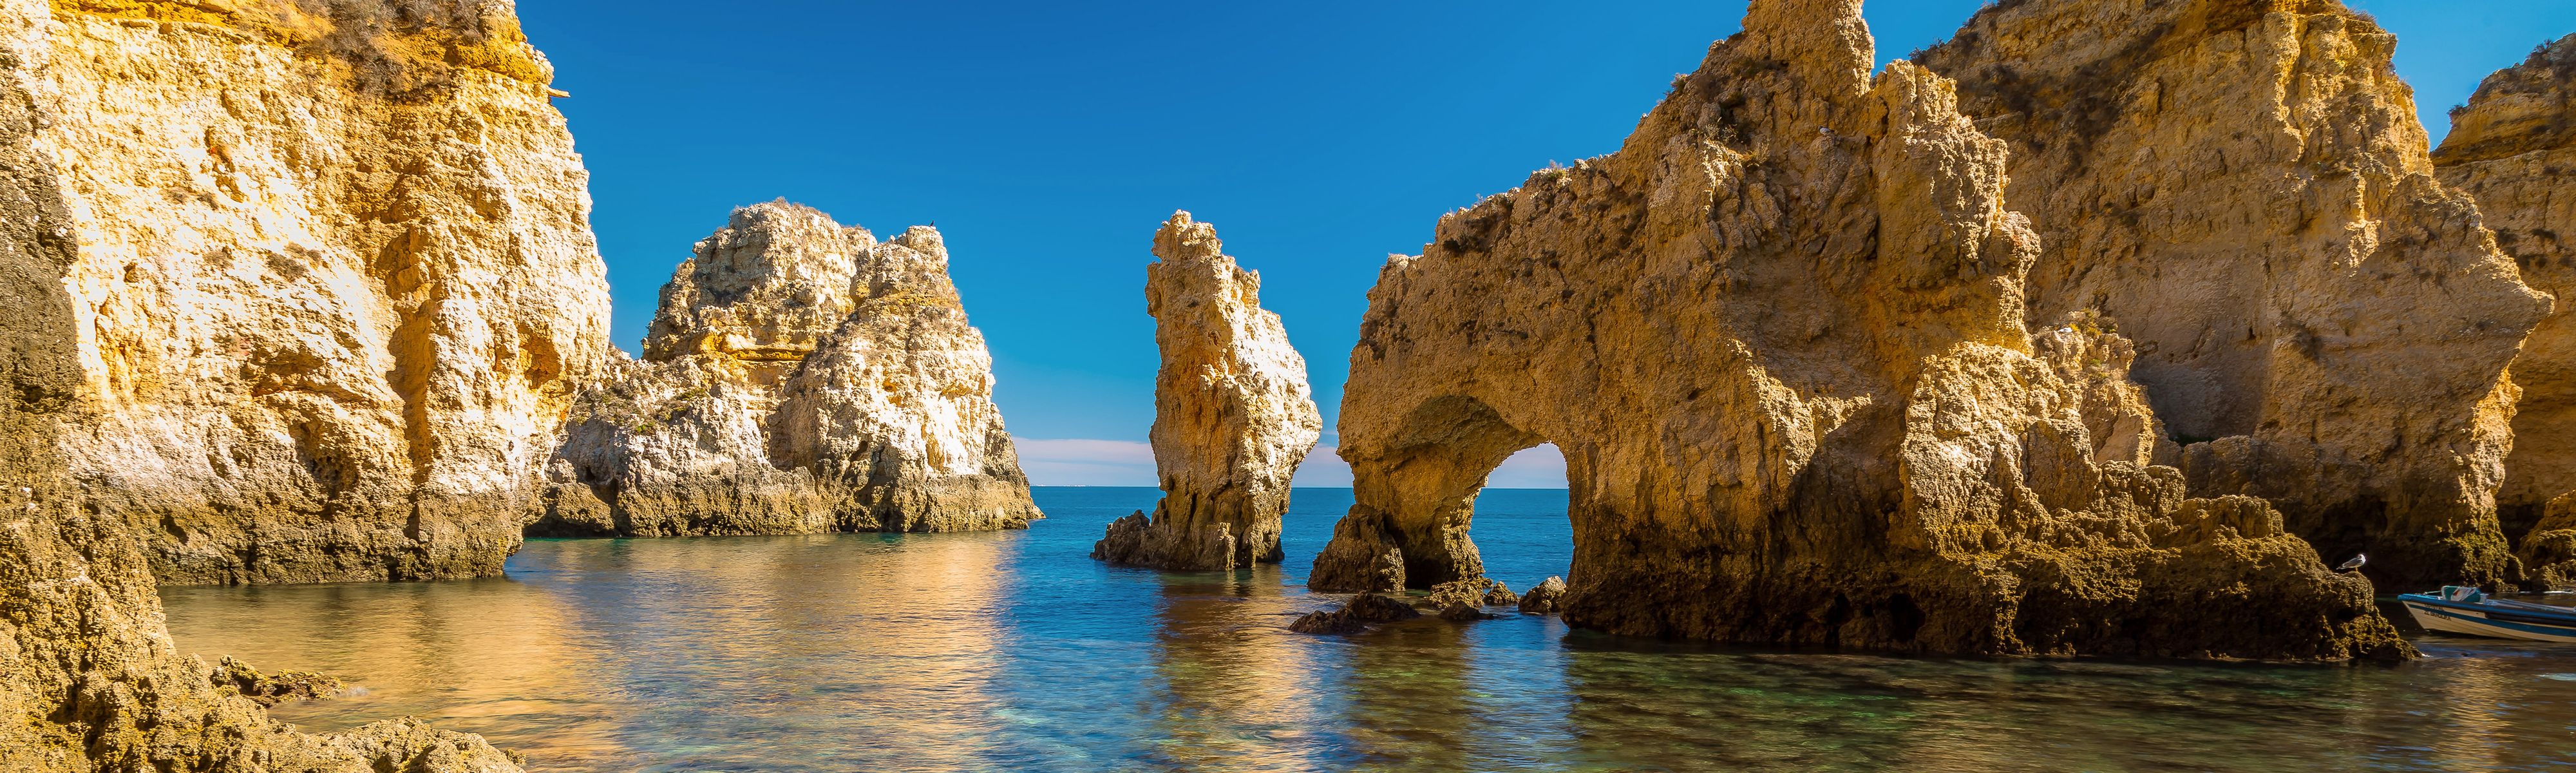 coastal caves along the ocean in lagos portugal